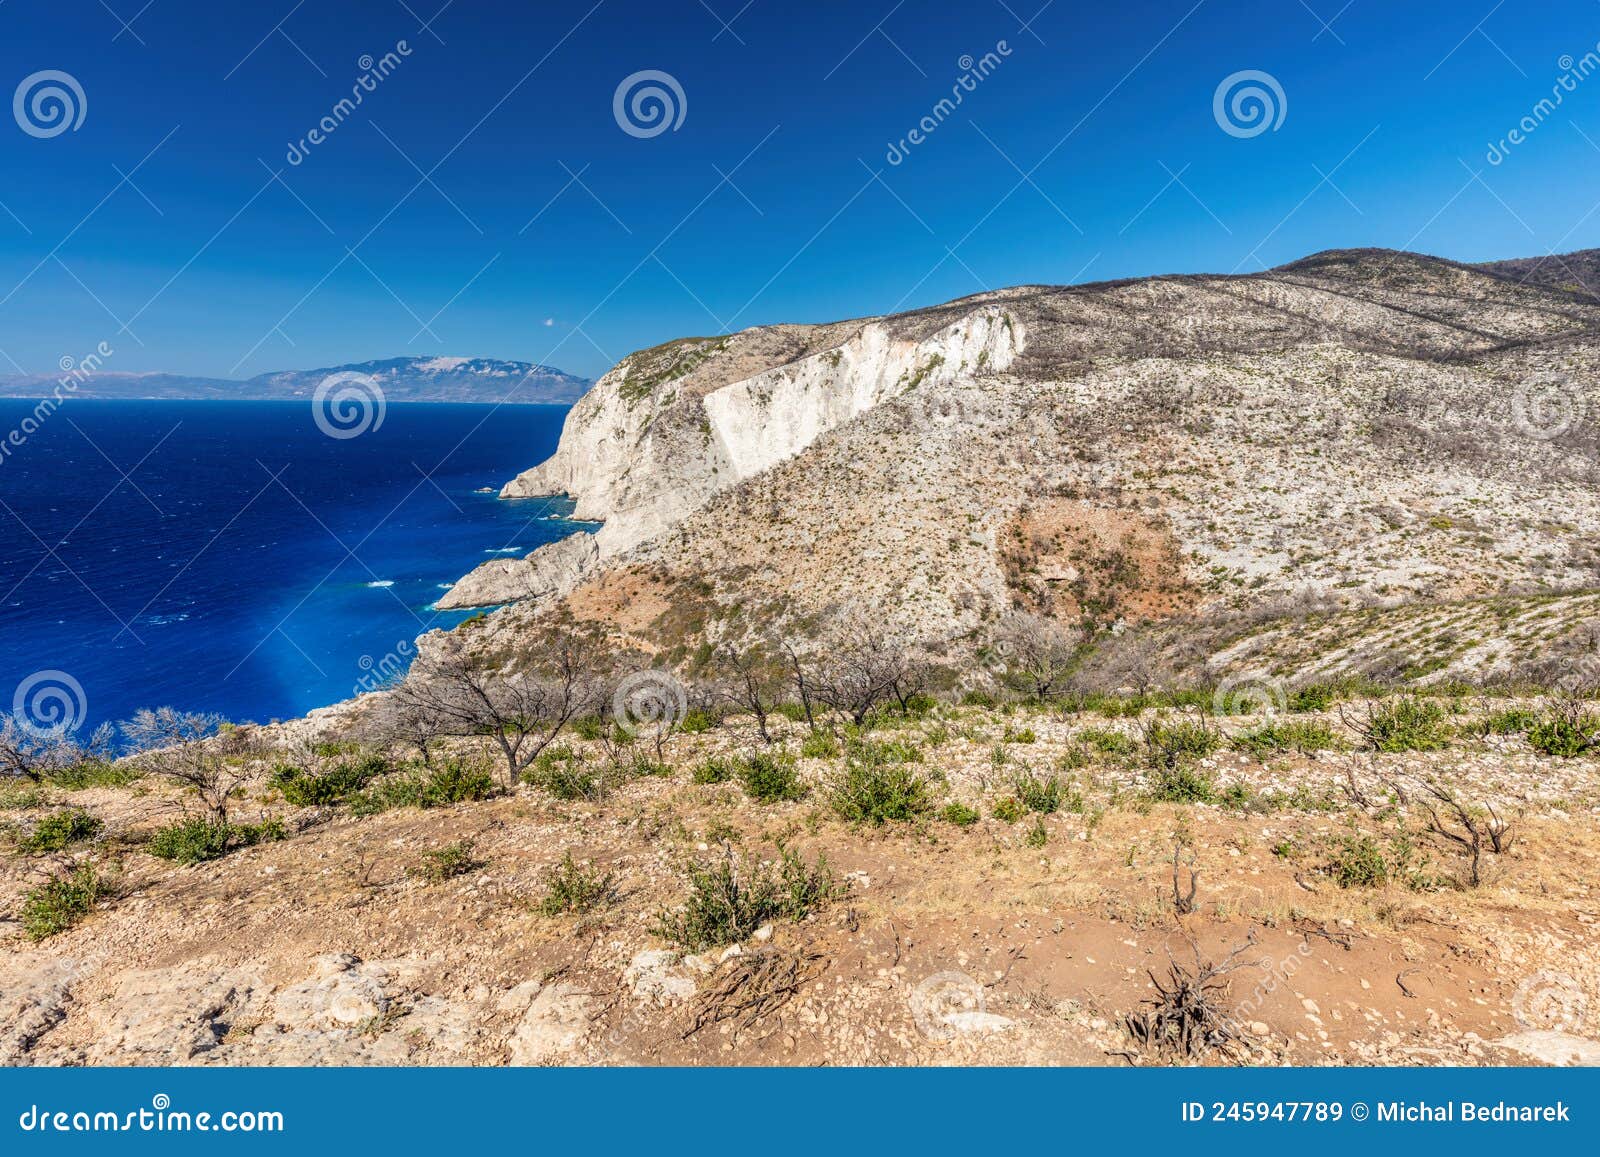 cliffs and ioanian sea at zakynthos, greece